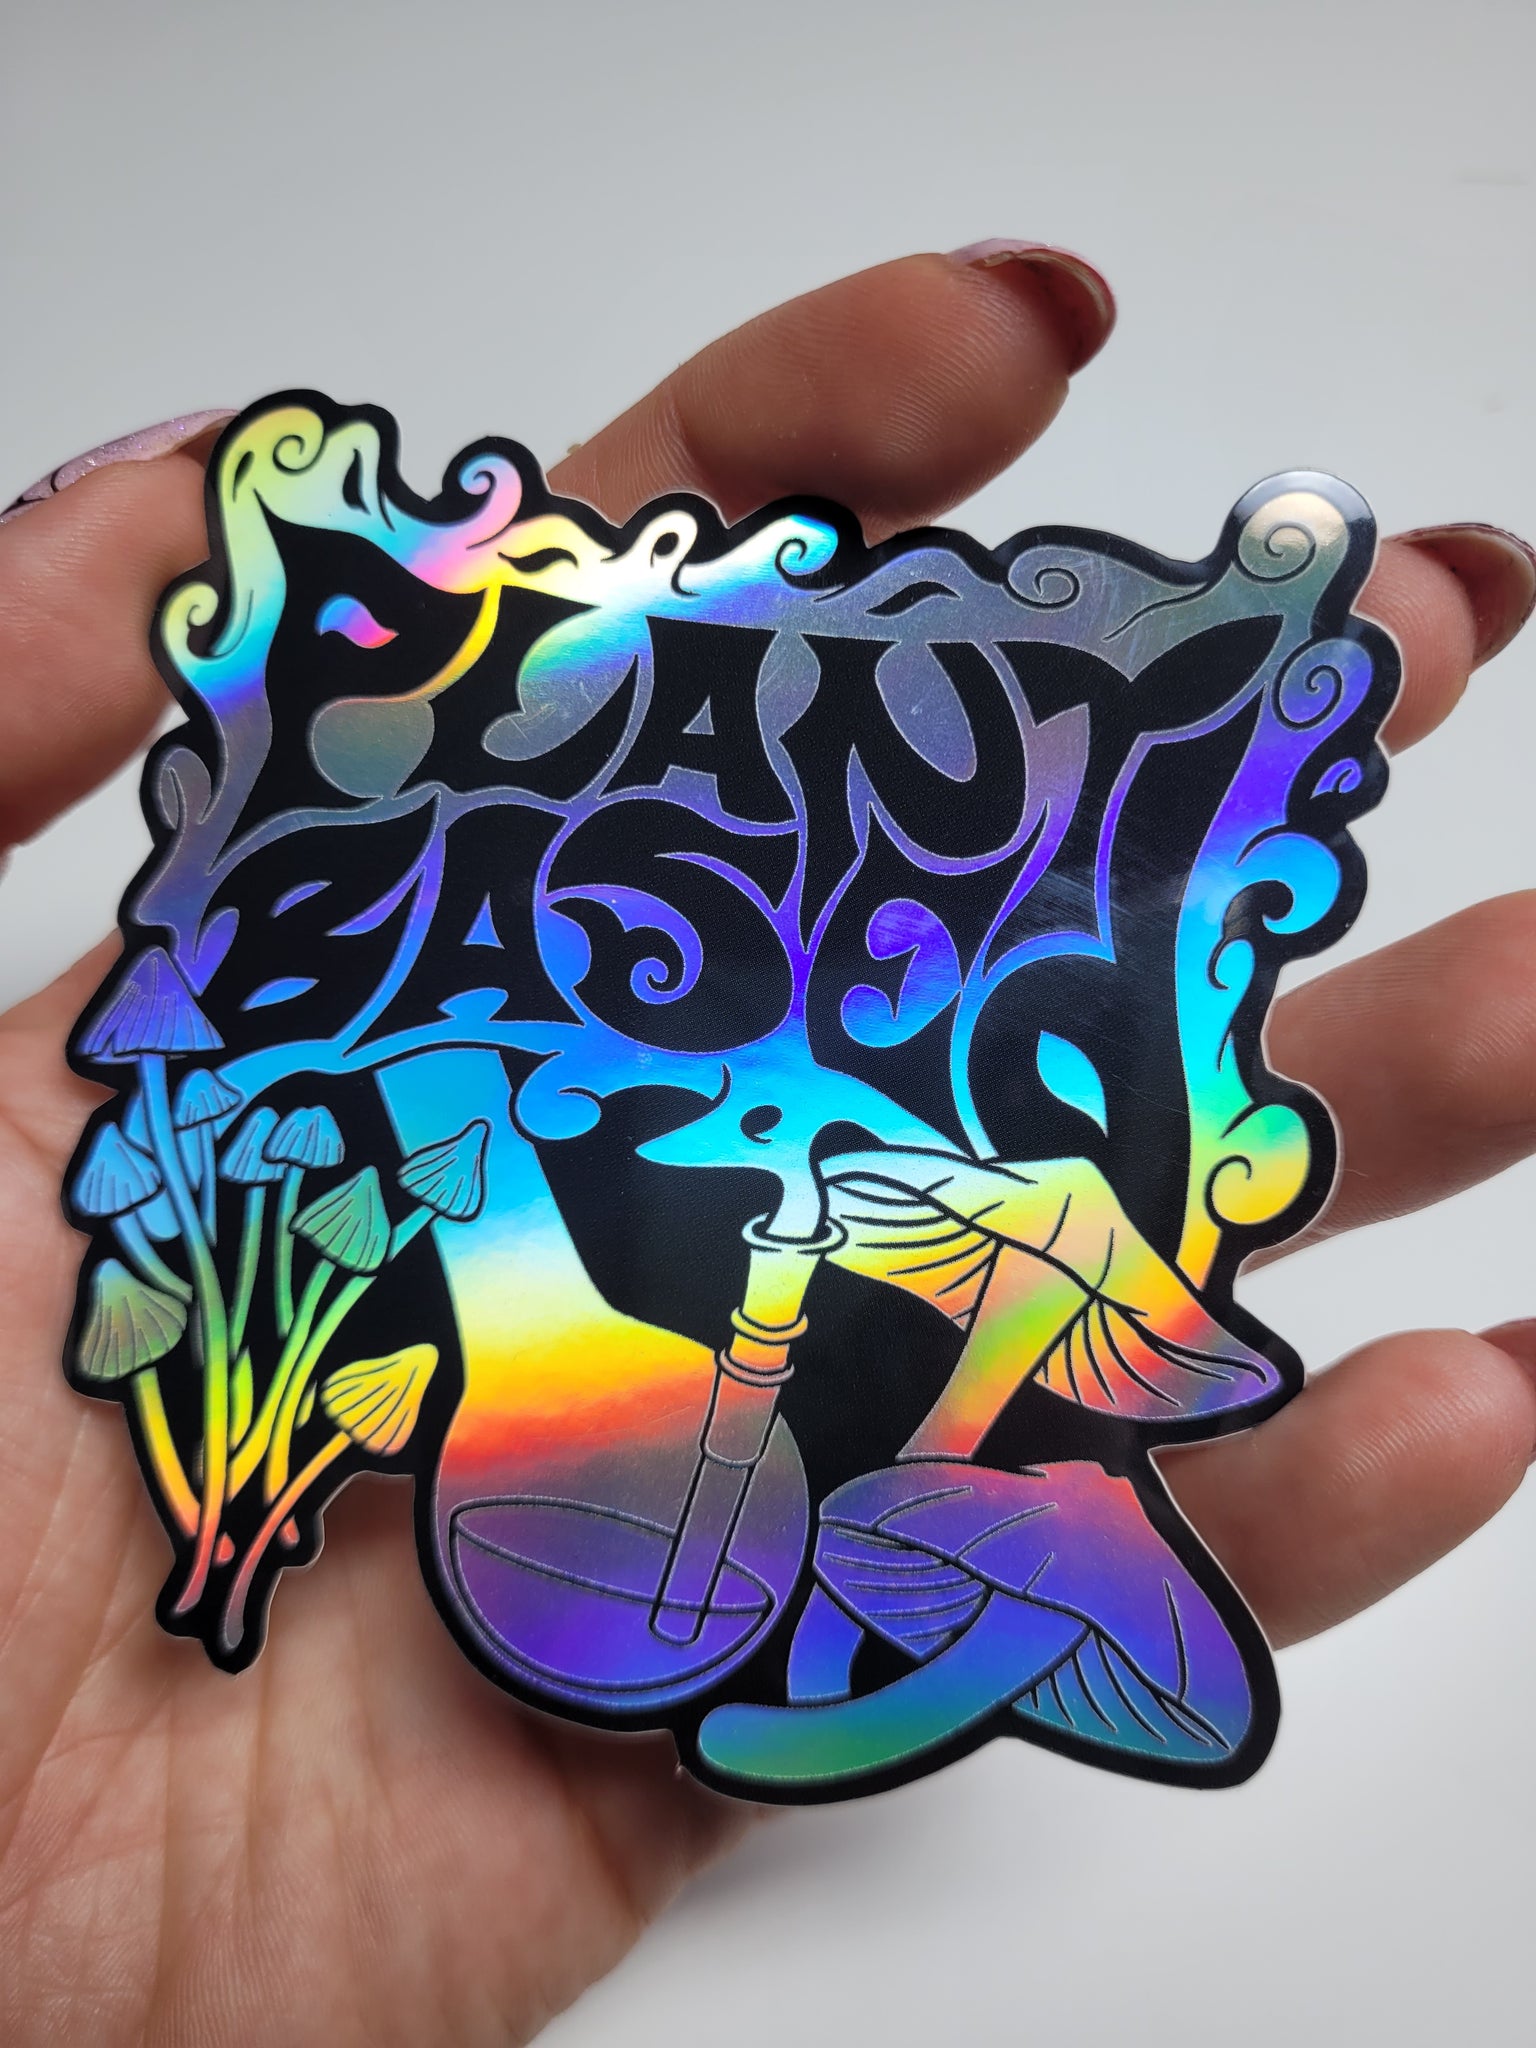 NEW 'Plant Based' Holographic Vinyl Sticker – Anticarnist